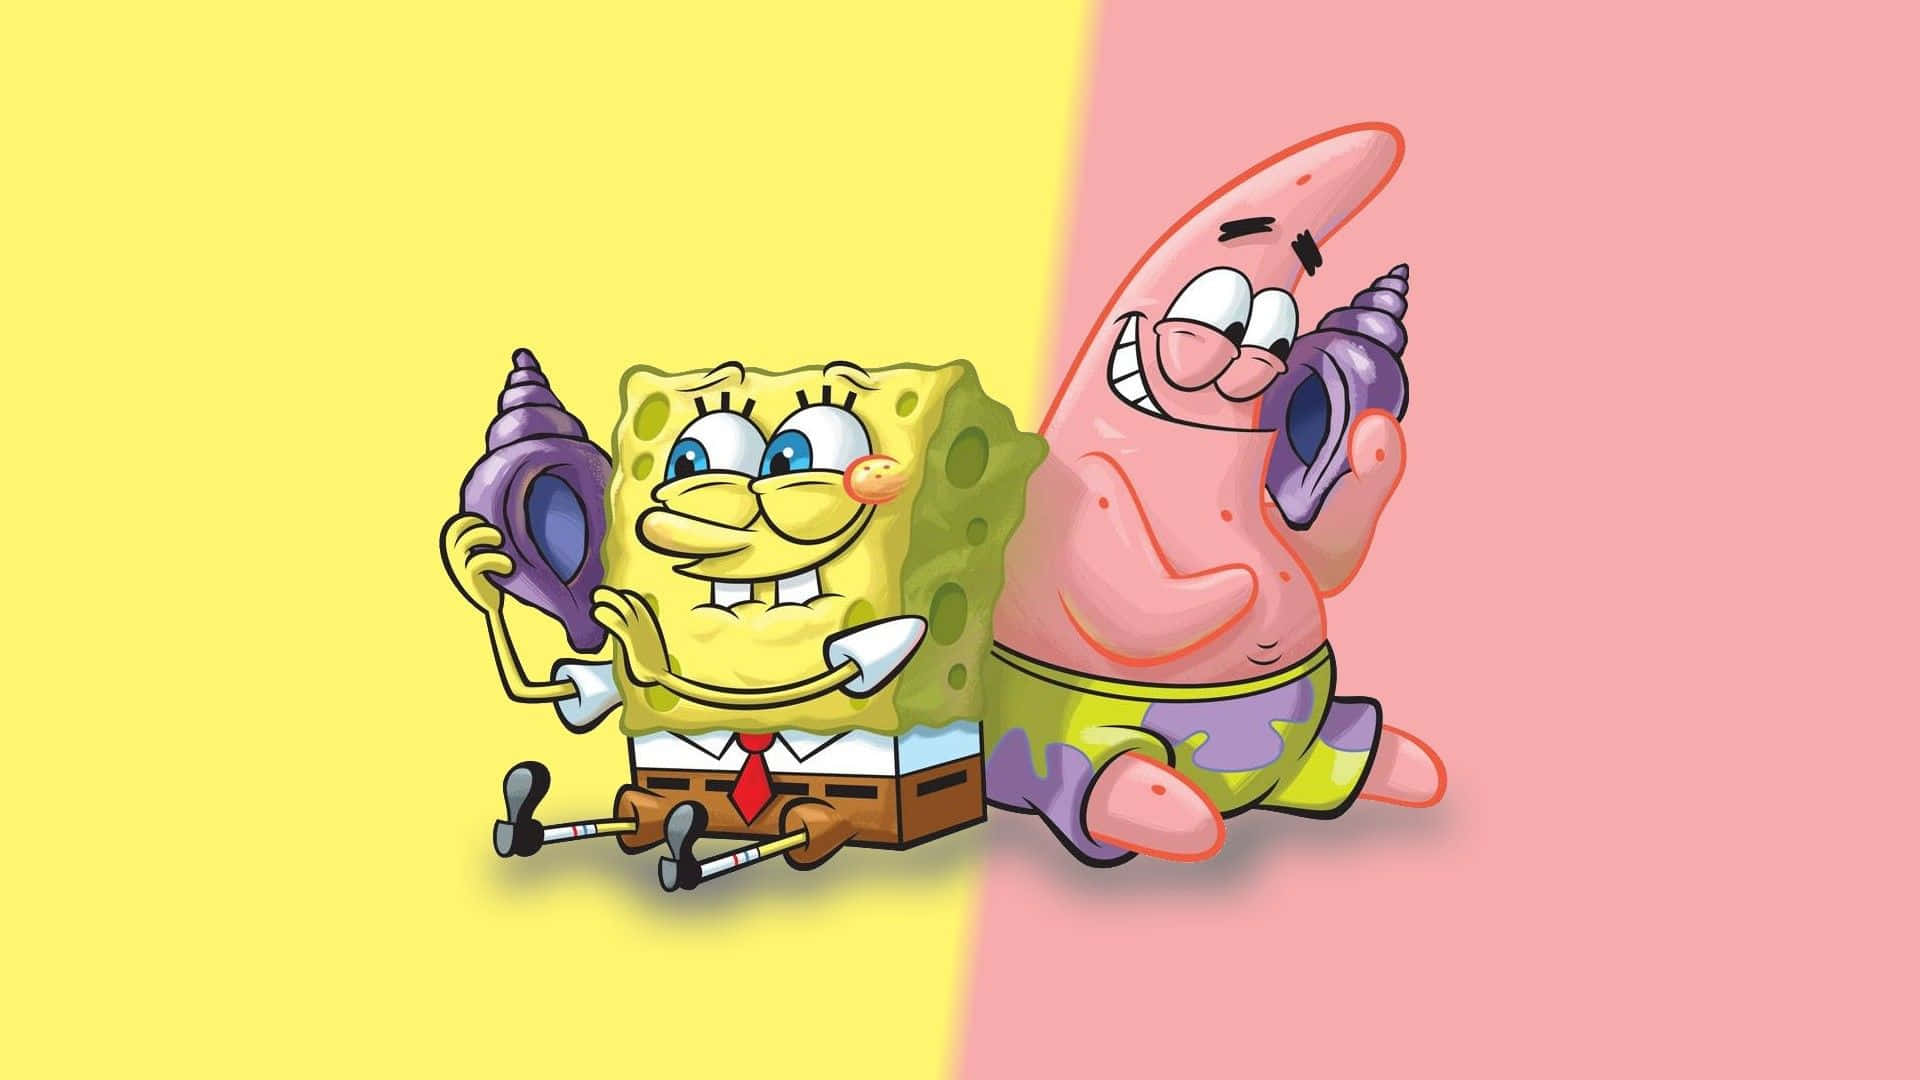 Patrick and SpongeBob Aesthetic Illustration Wallpaper